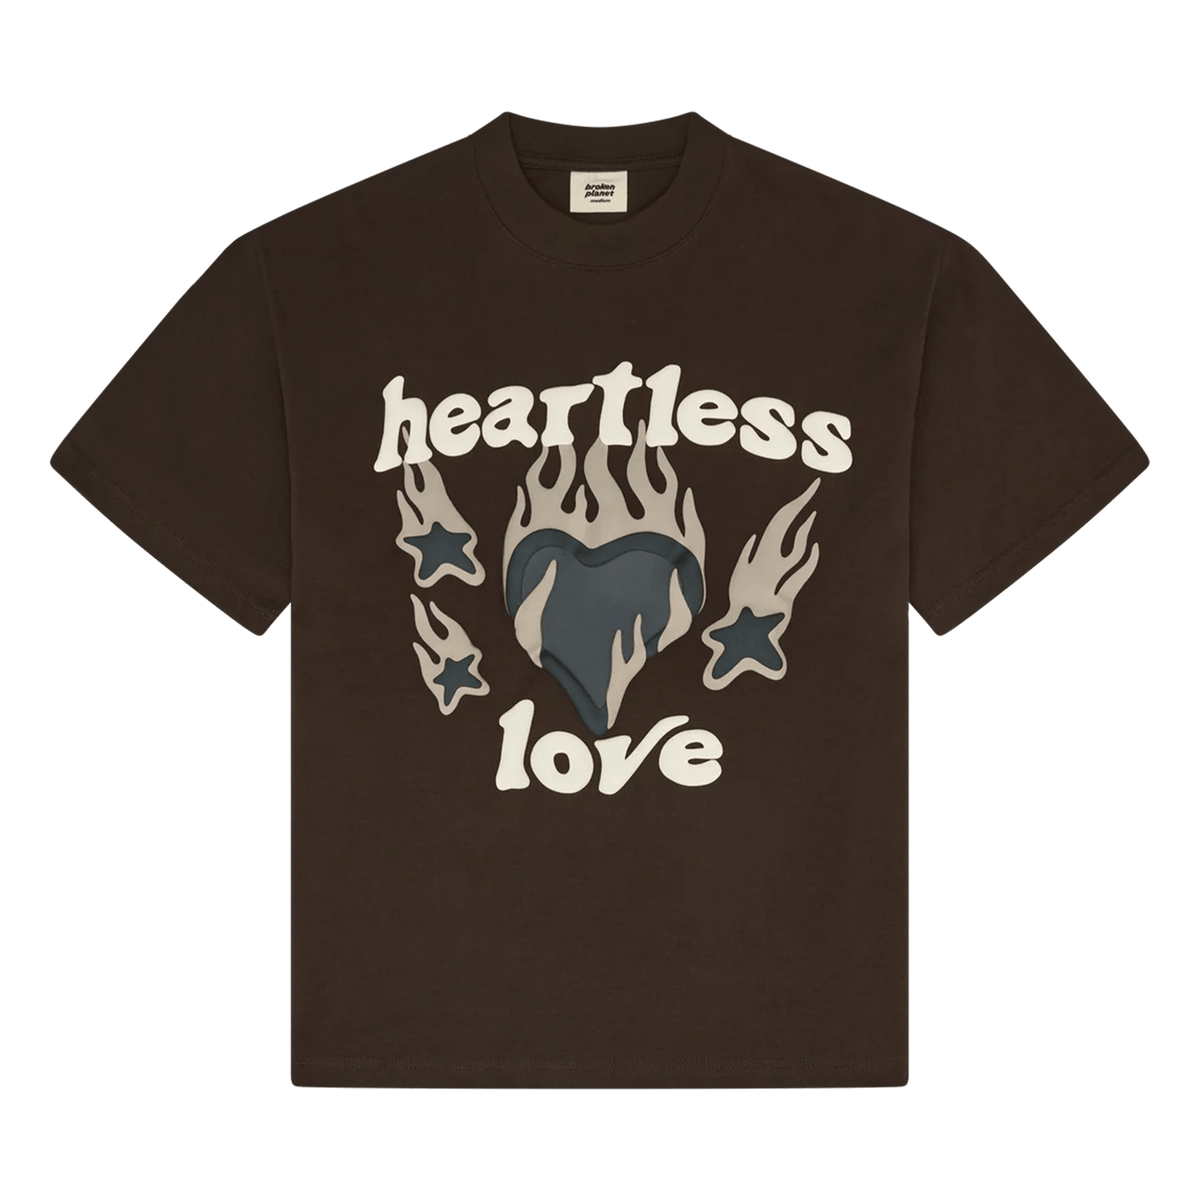 Broken Planet Market T-Shirt 'Heartless Love' - Mocha Brown - Kick Game